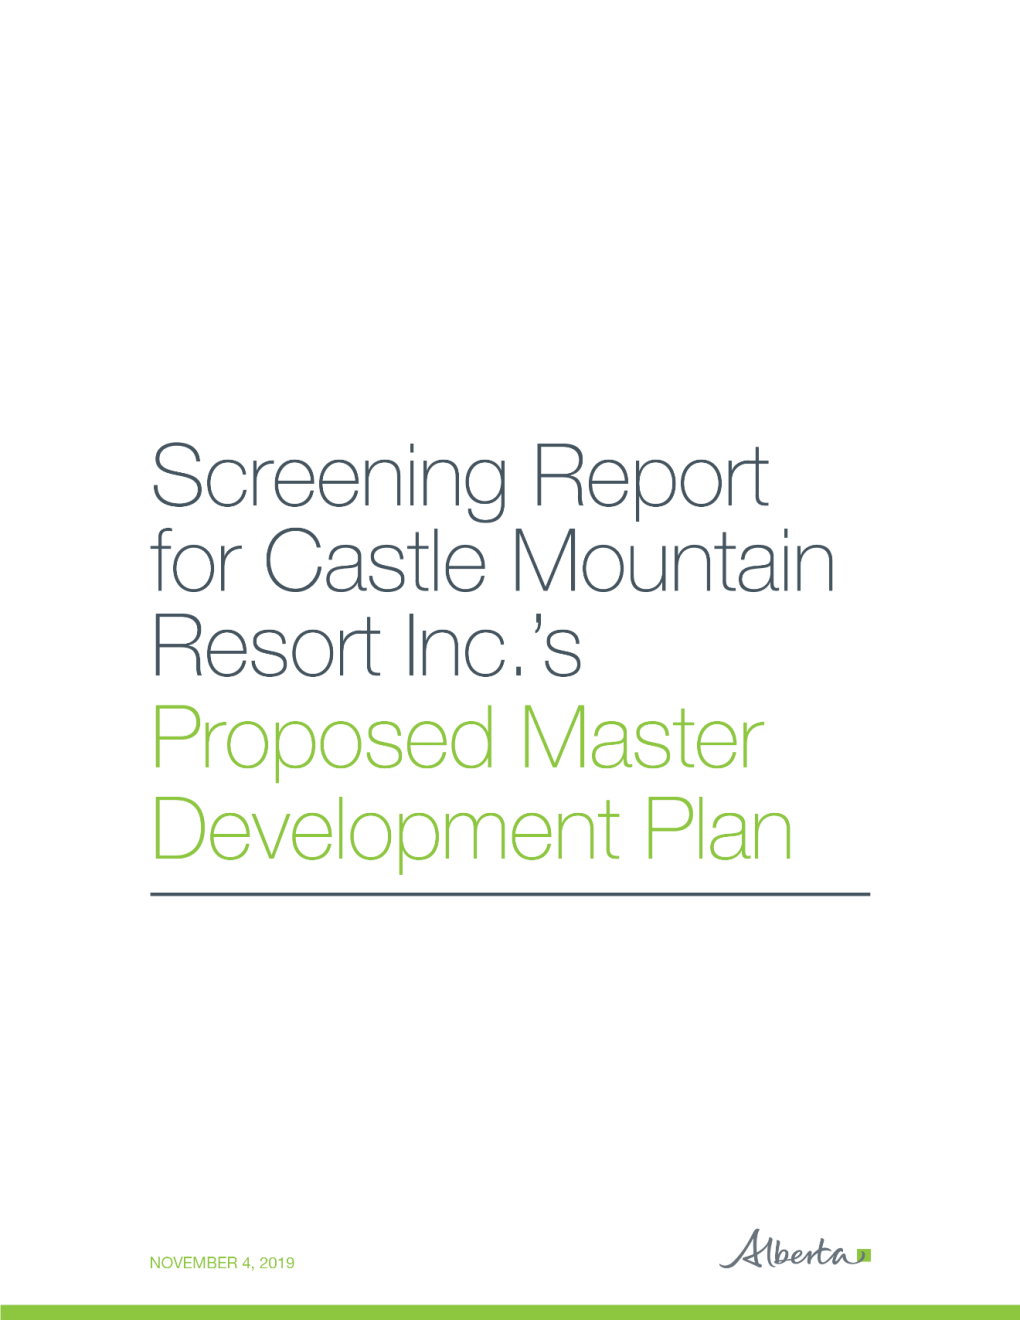 Screening Report for Castle Mountain Resort Inc